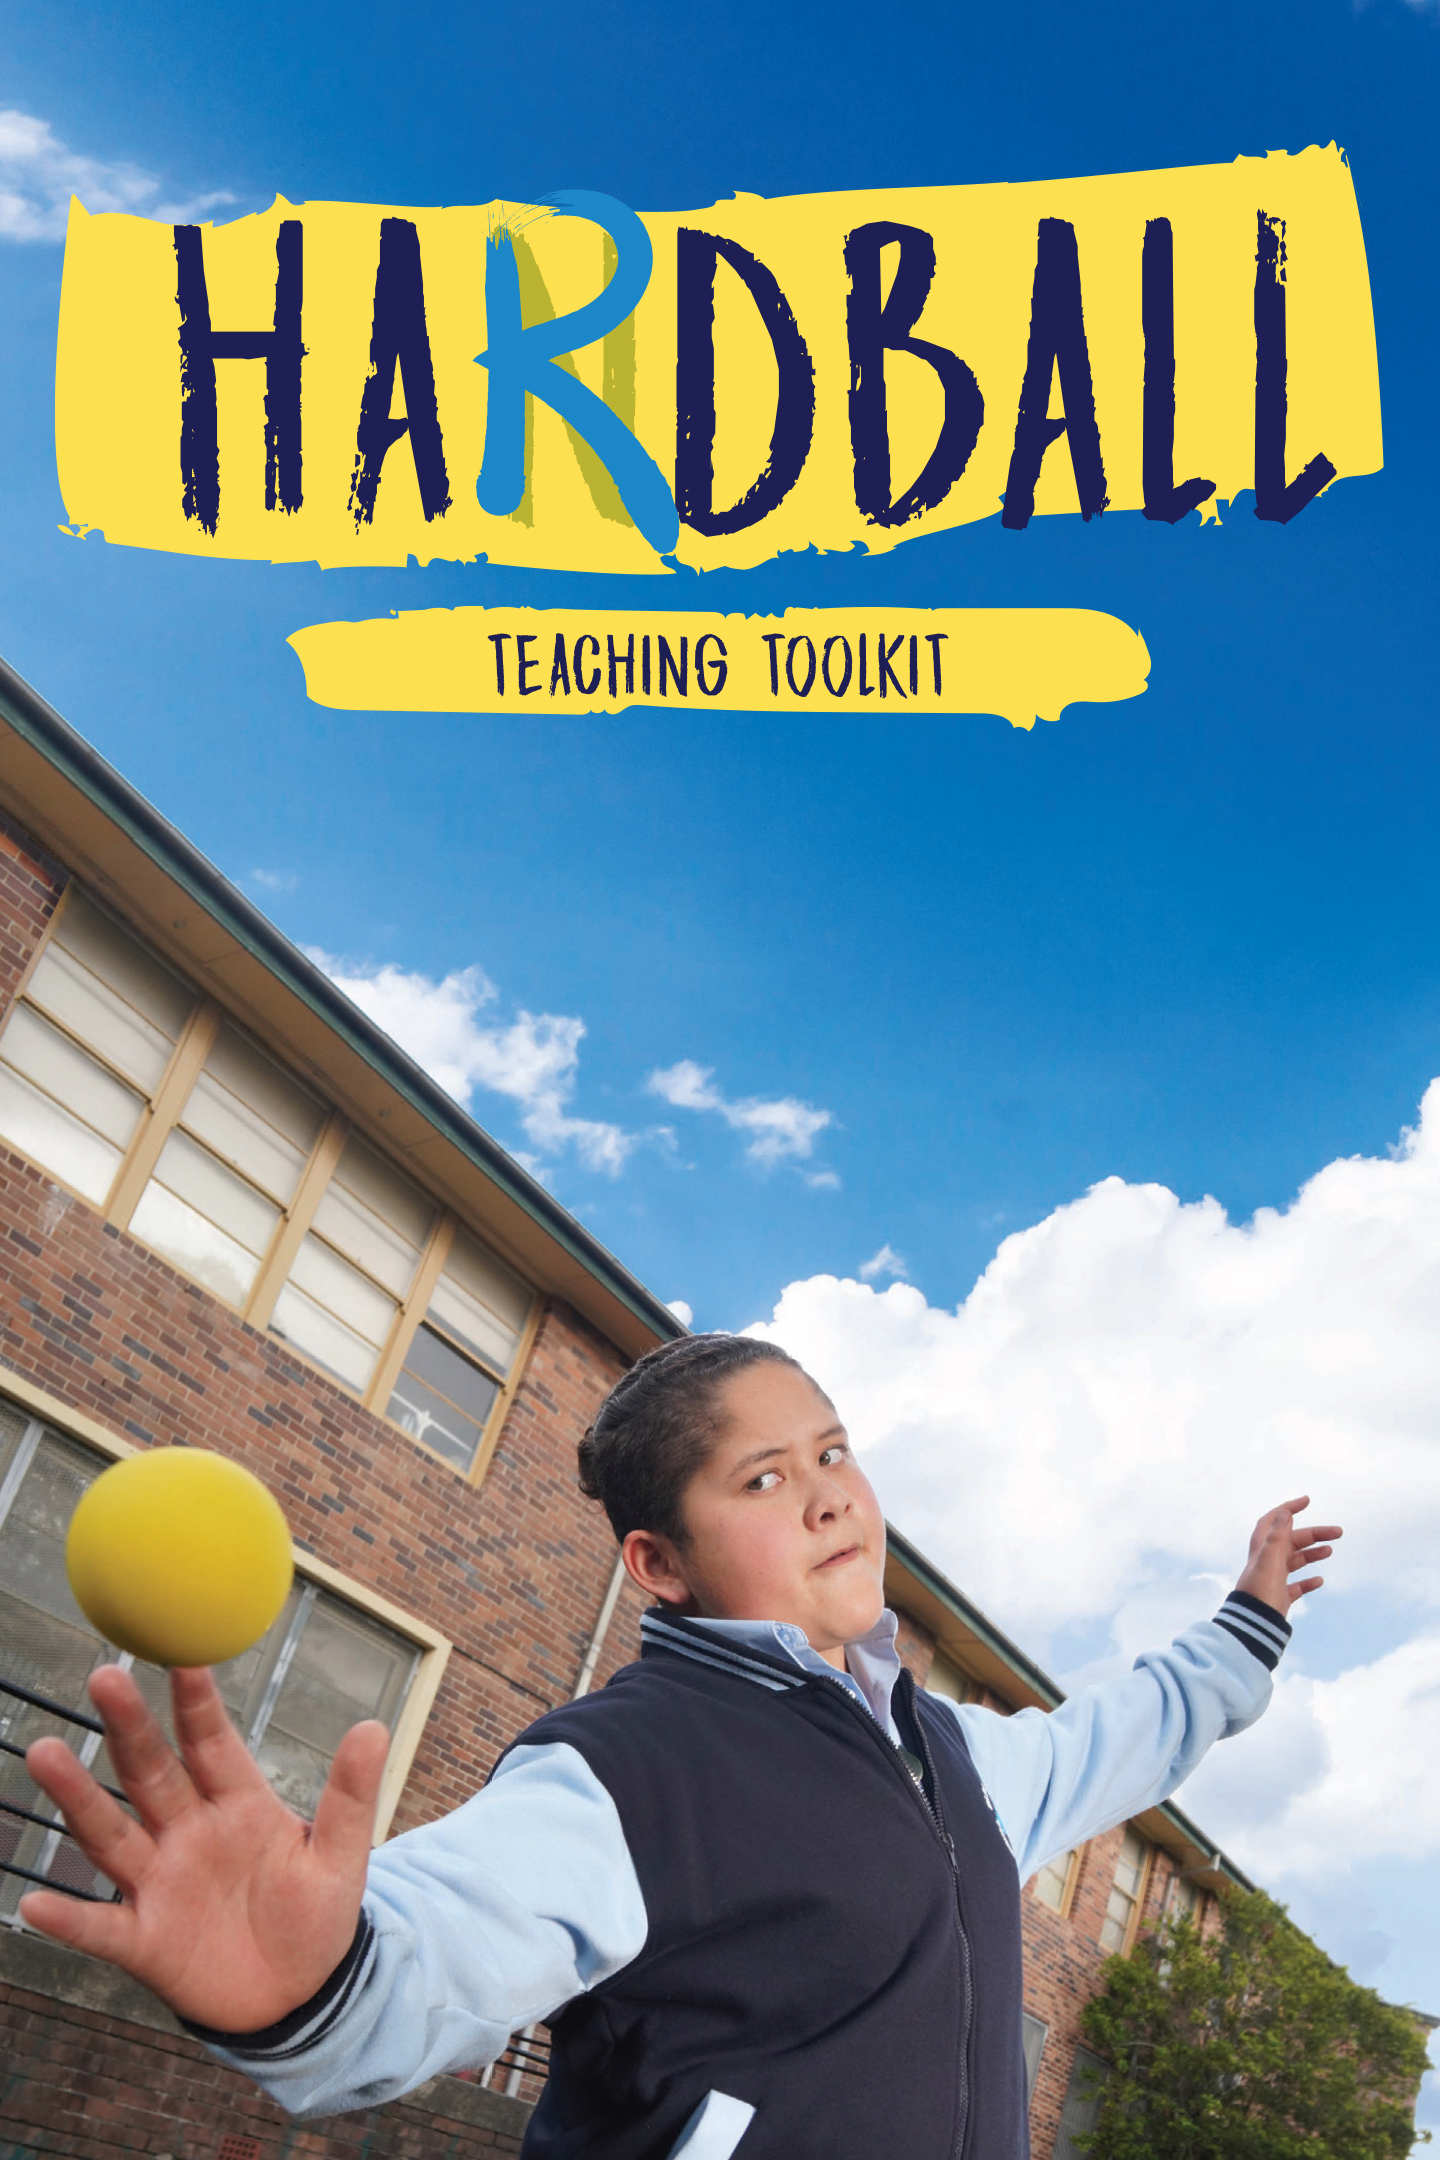 10434-hardball-teaching-toolkit